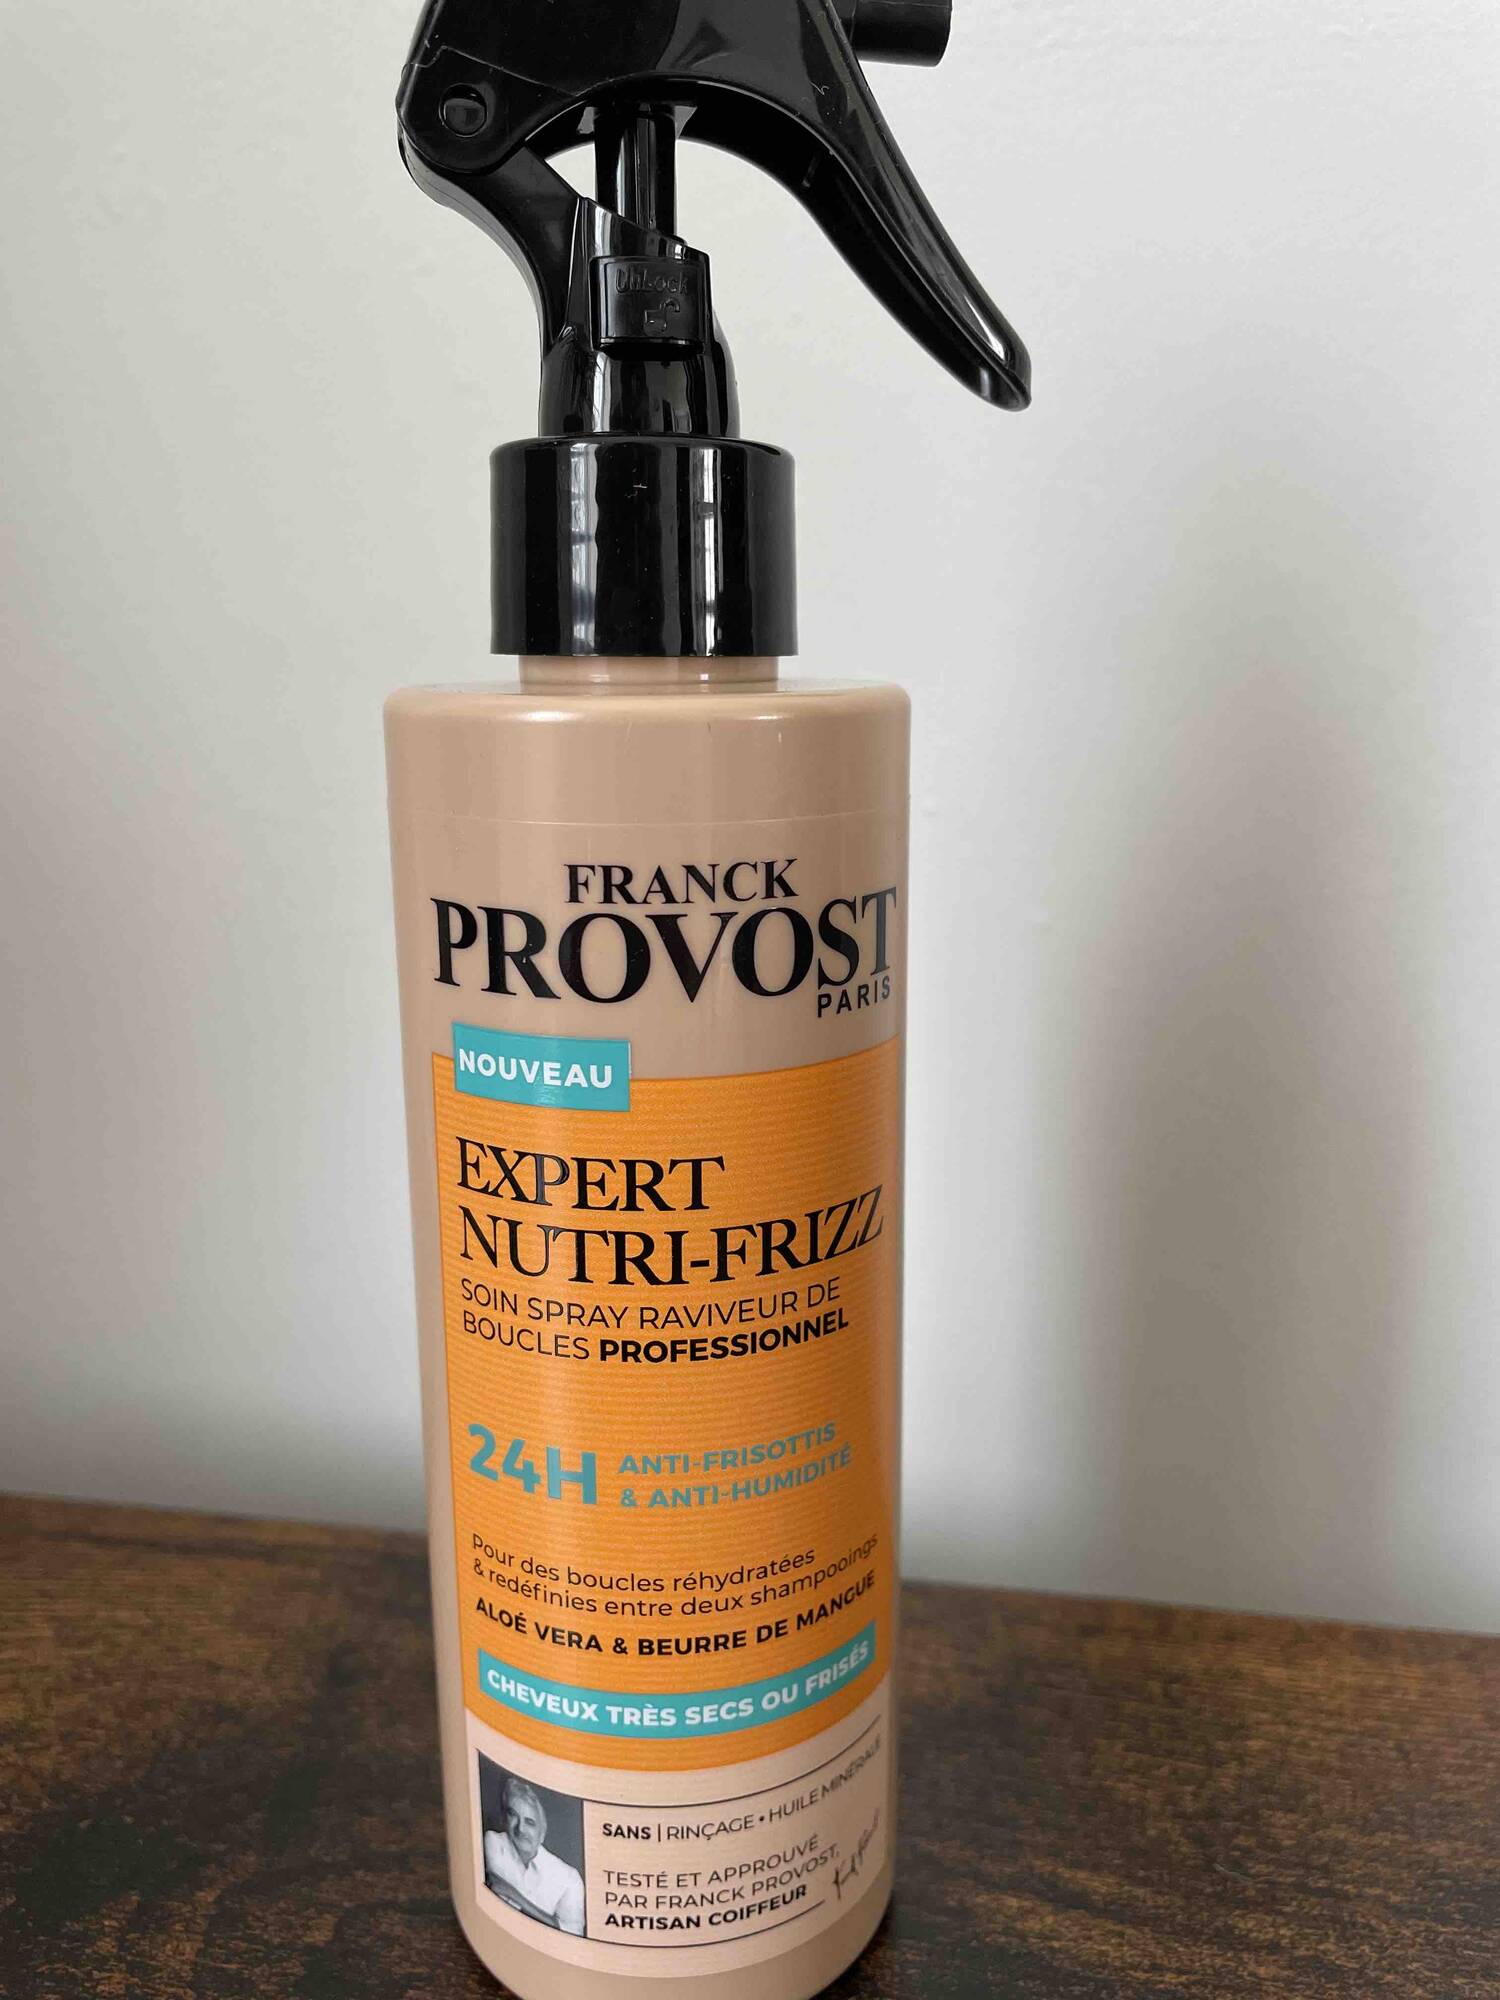 FRANCK PROVOST - Expert nutri-frizz - Soin spray raviveur de boucles